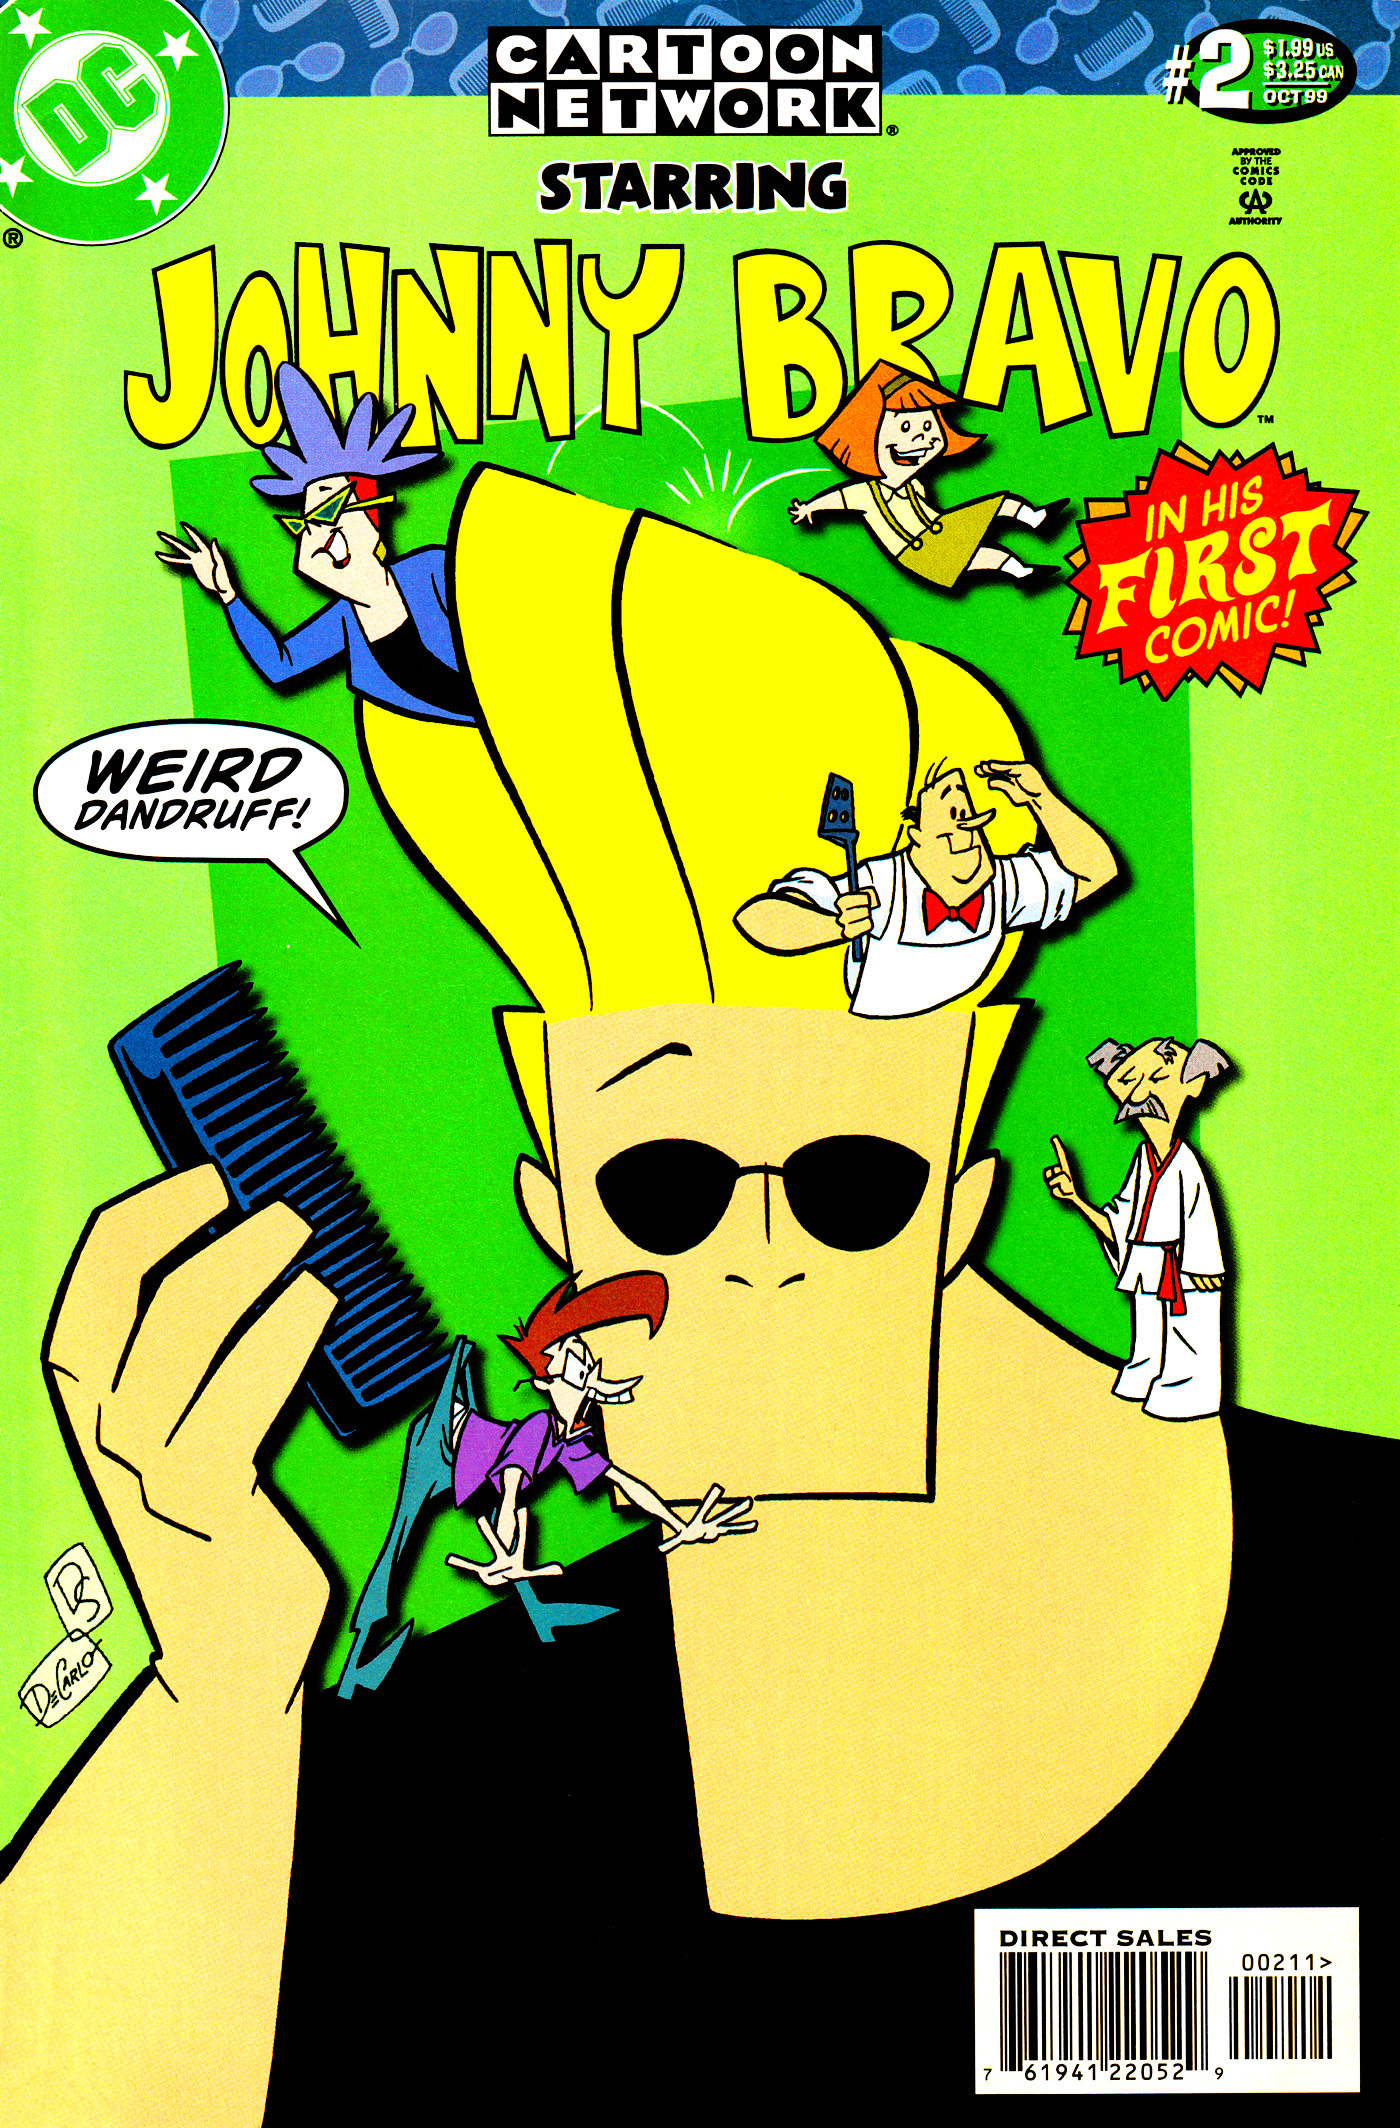 Johnny Bravo: Cartoon Network's Cassanova